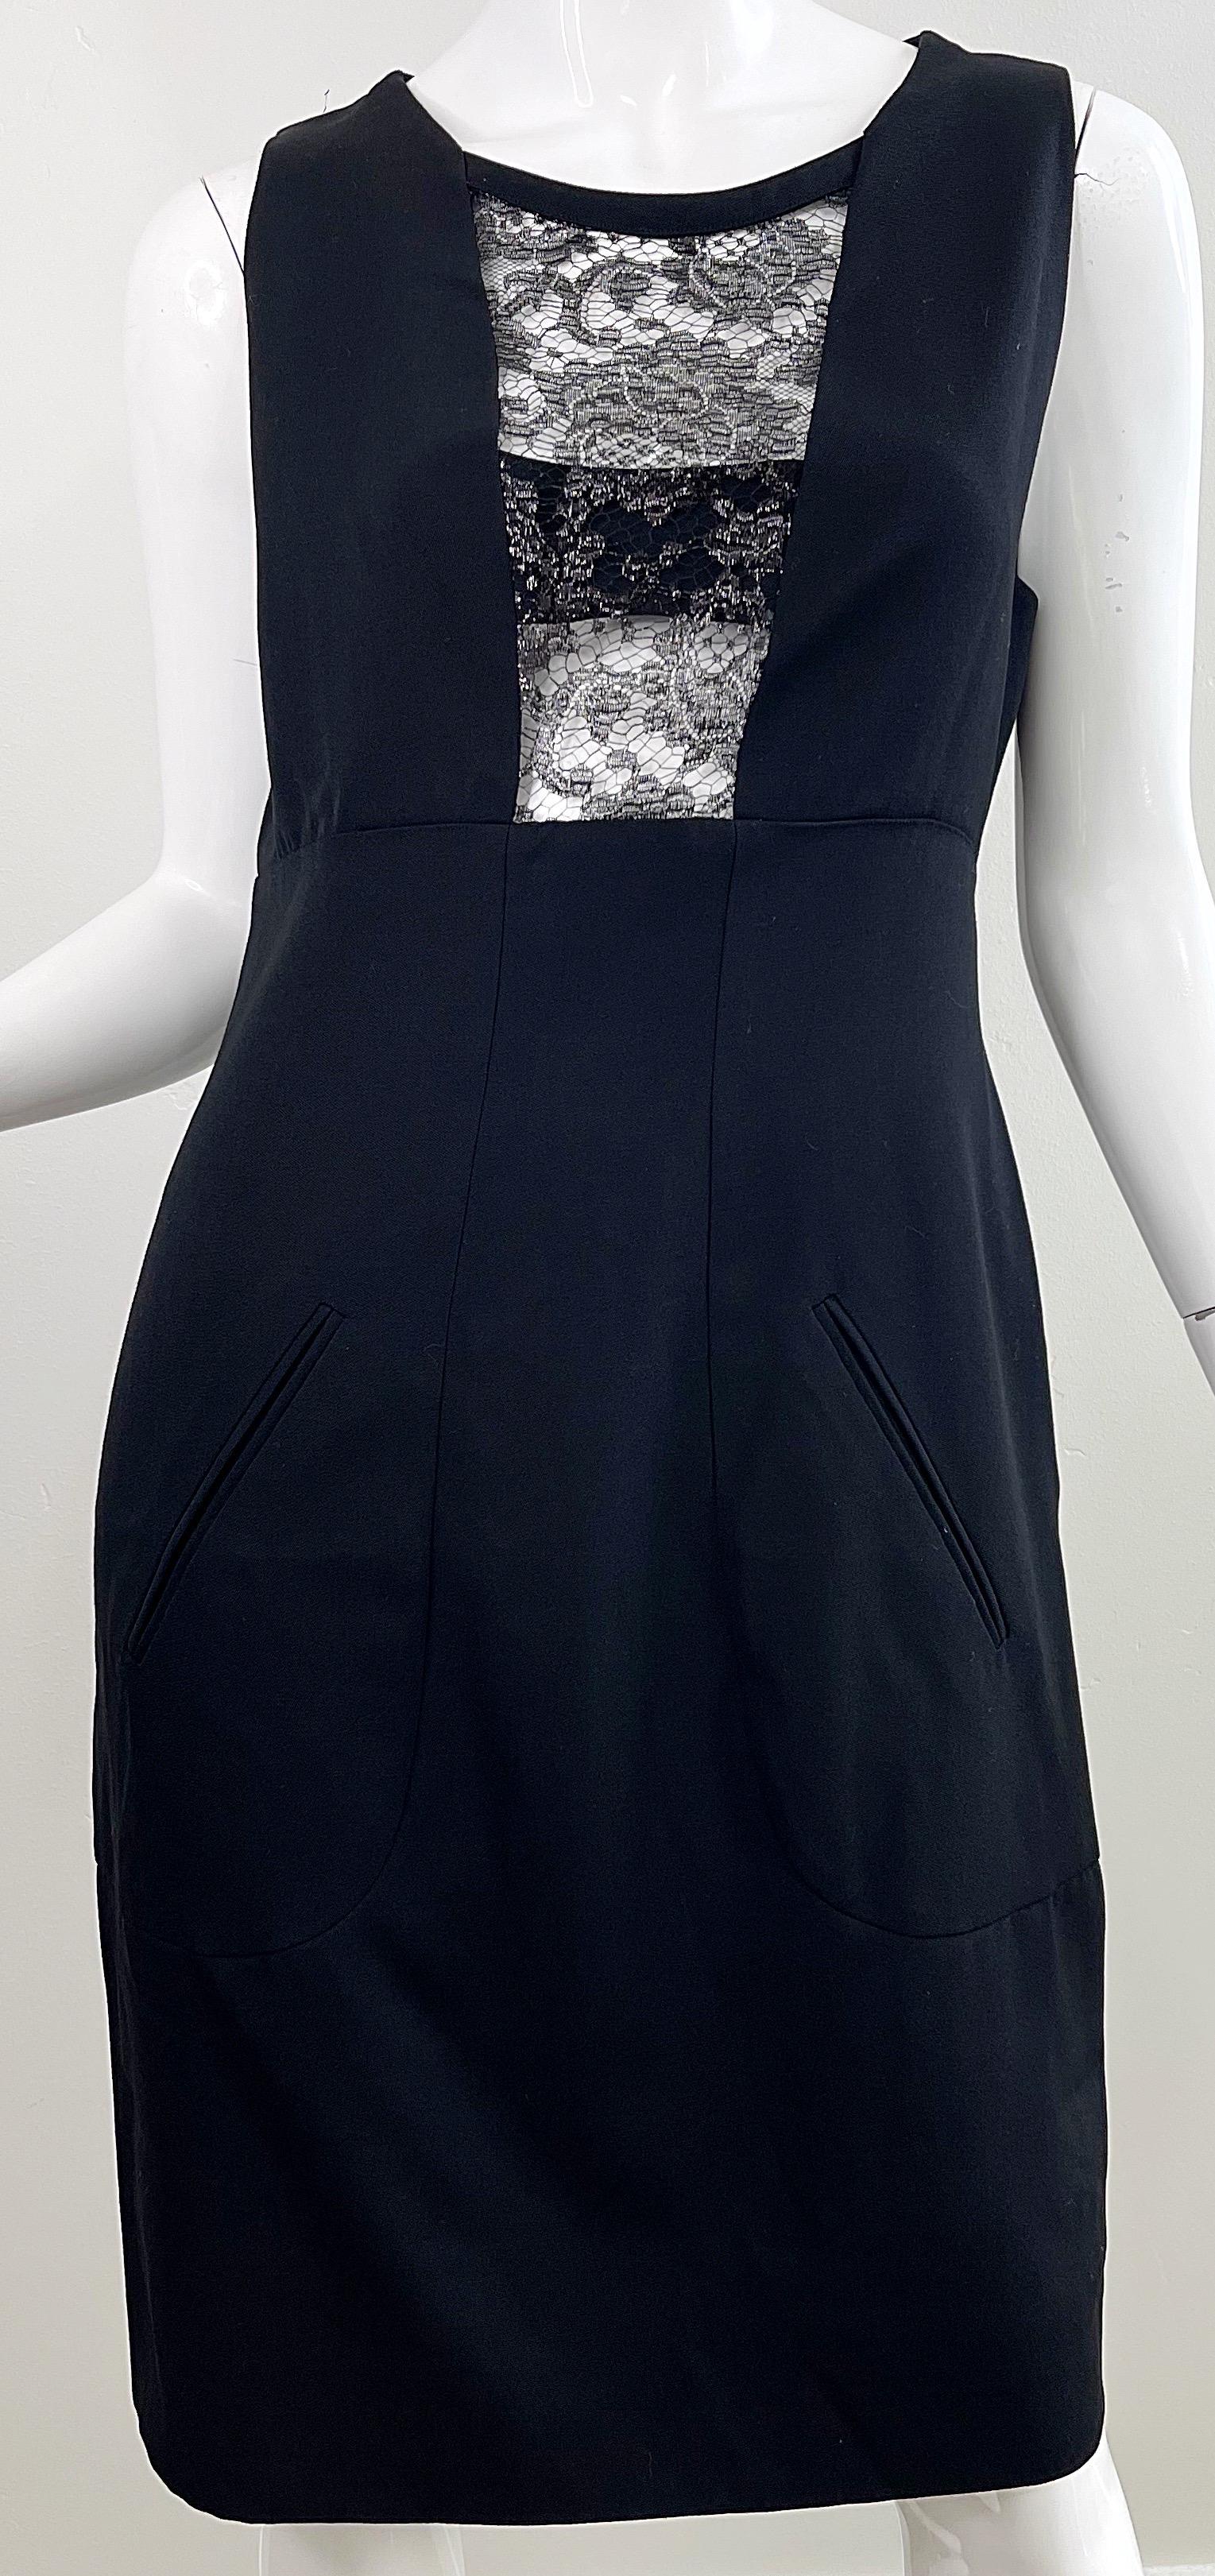 Karl Lagerfeld 1980s Black Lace Cut - Out Size 44 / 10 12 Vintage Dress + Jacket For Sale 9